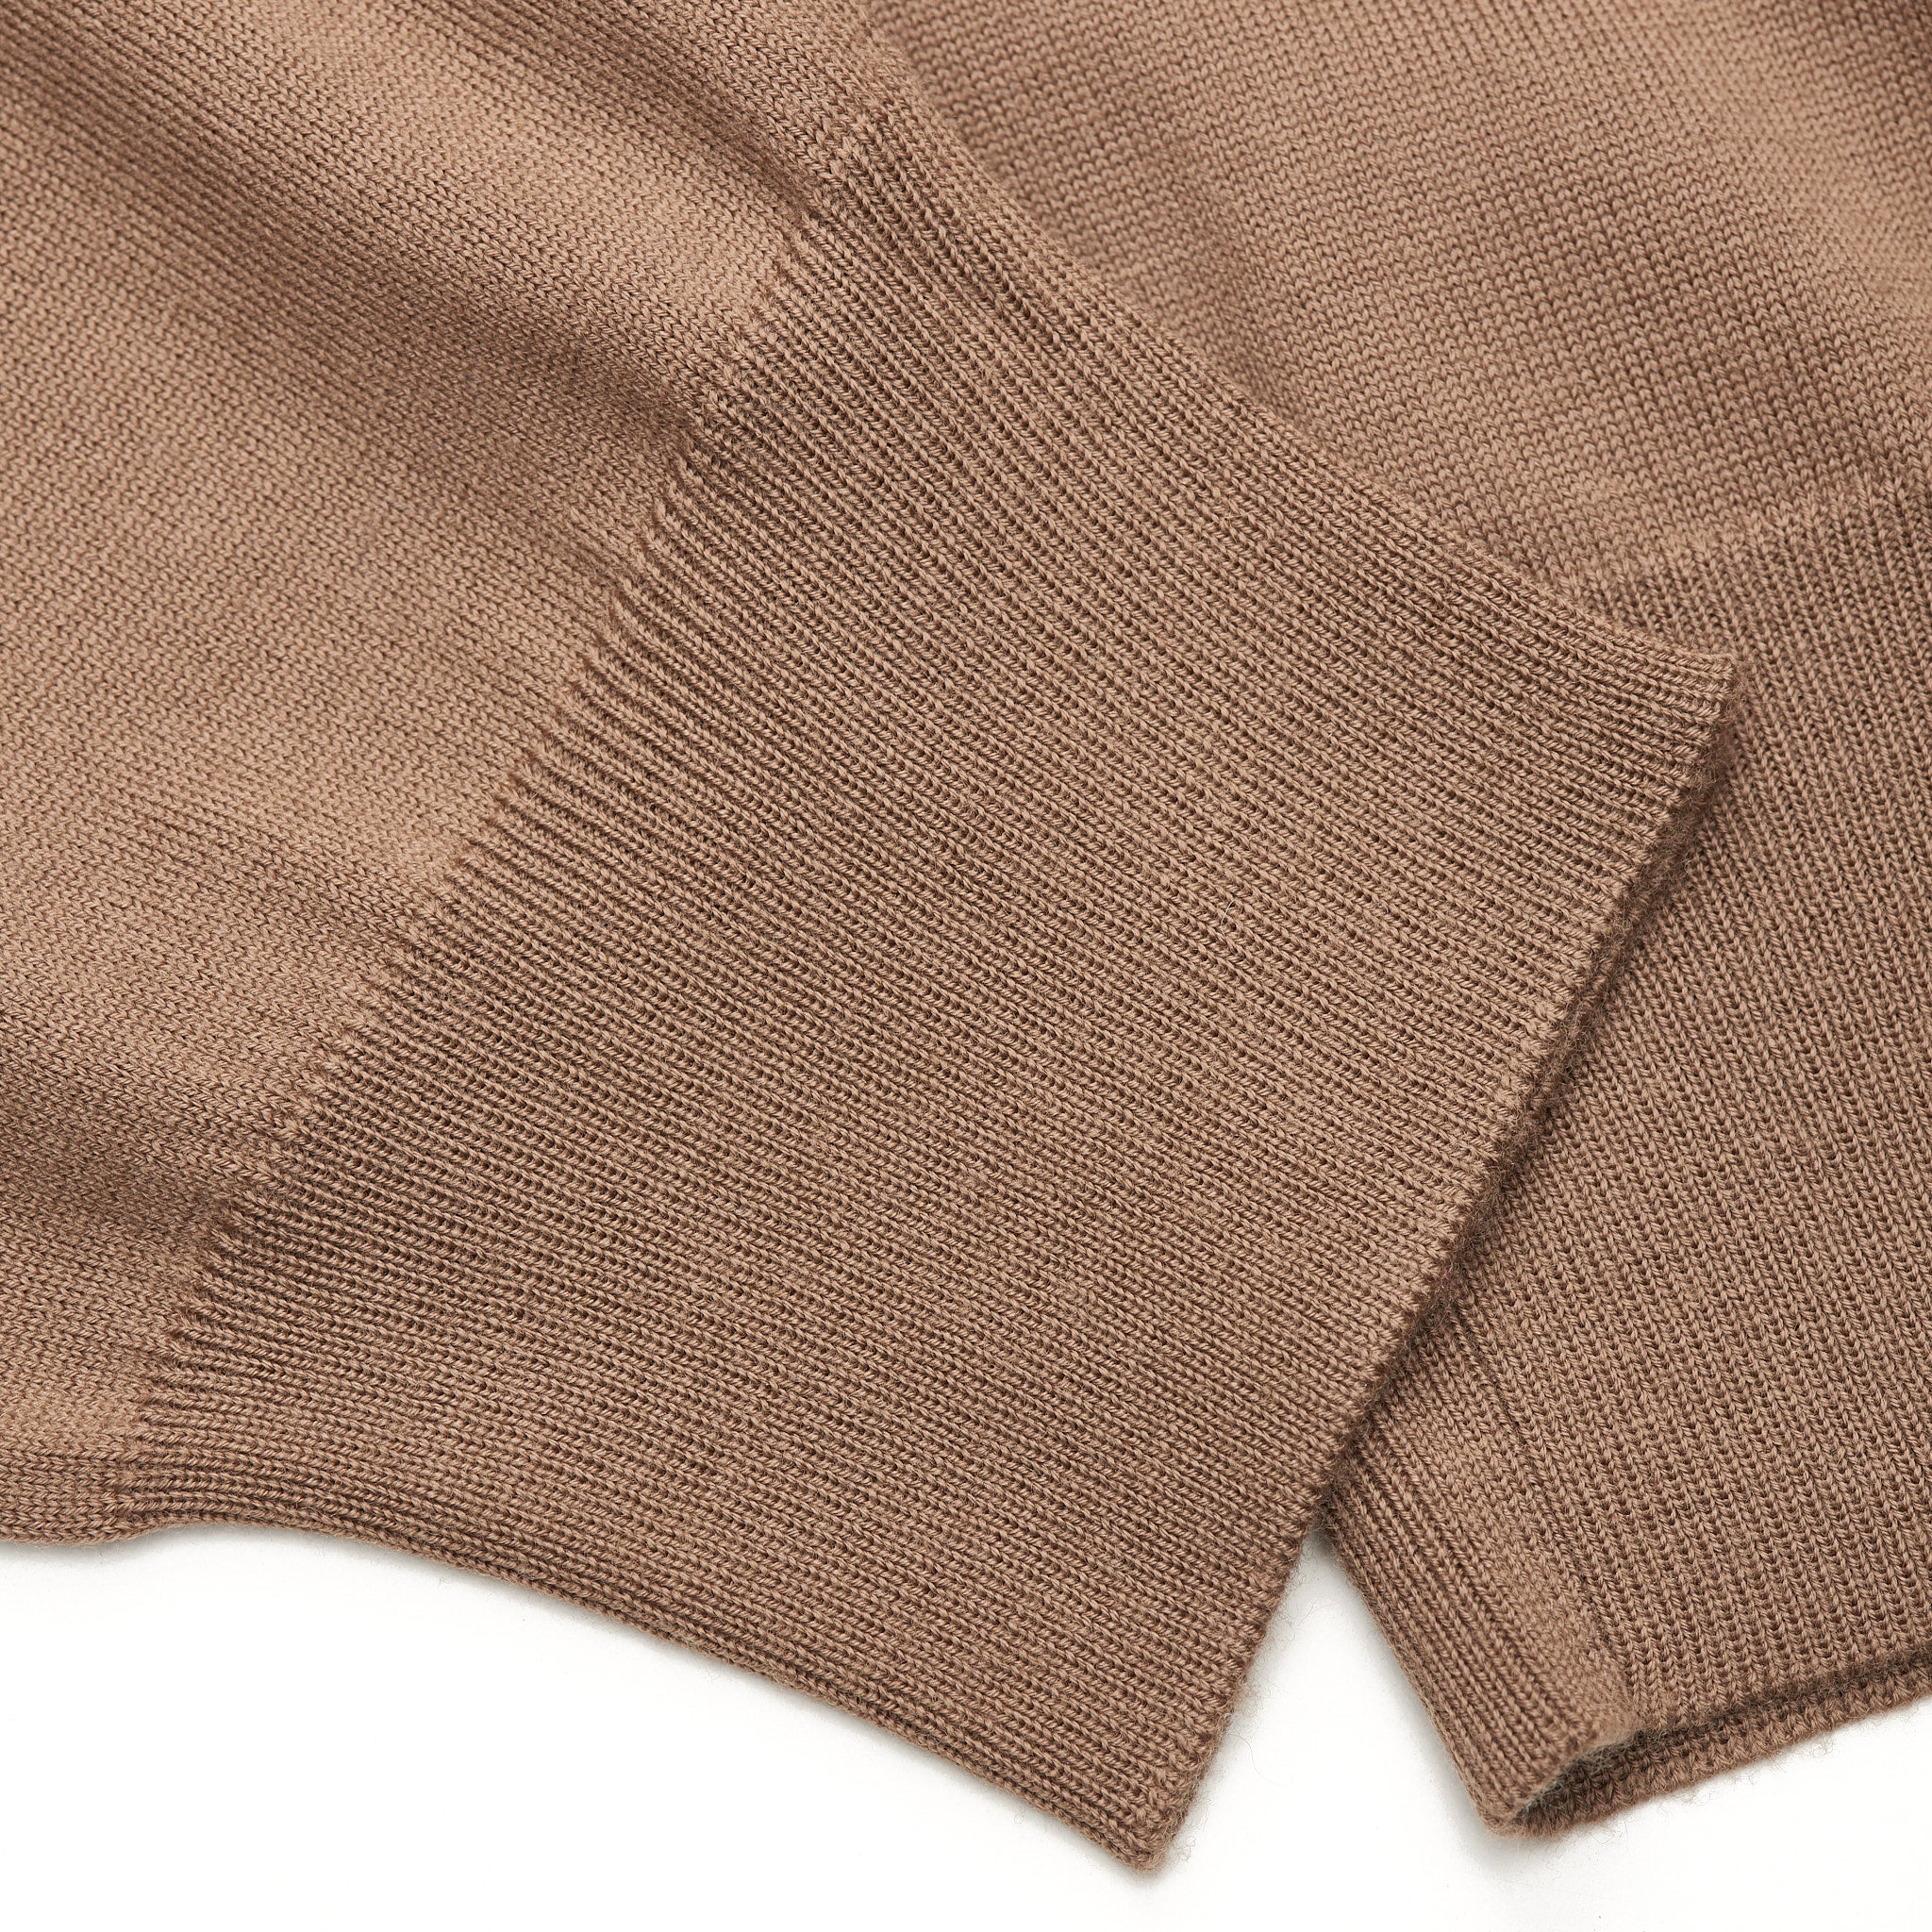 FEDELI Brown 15 Micron Wool Super 160's V-Neck Sweater EU 50 NEW US M FEDELI